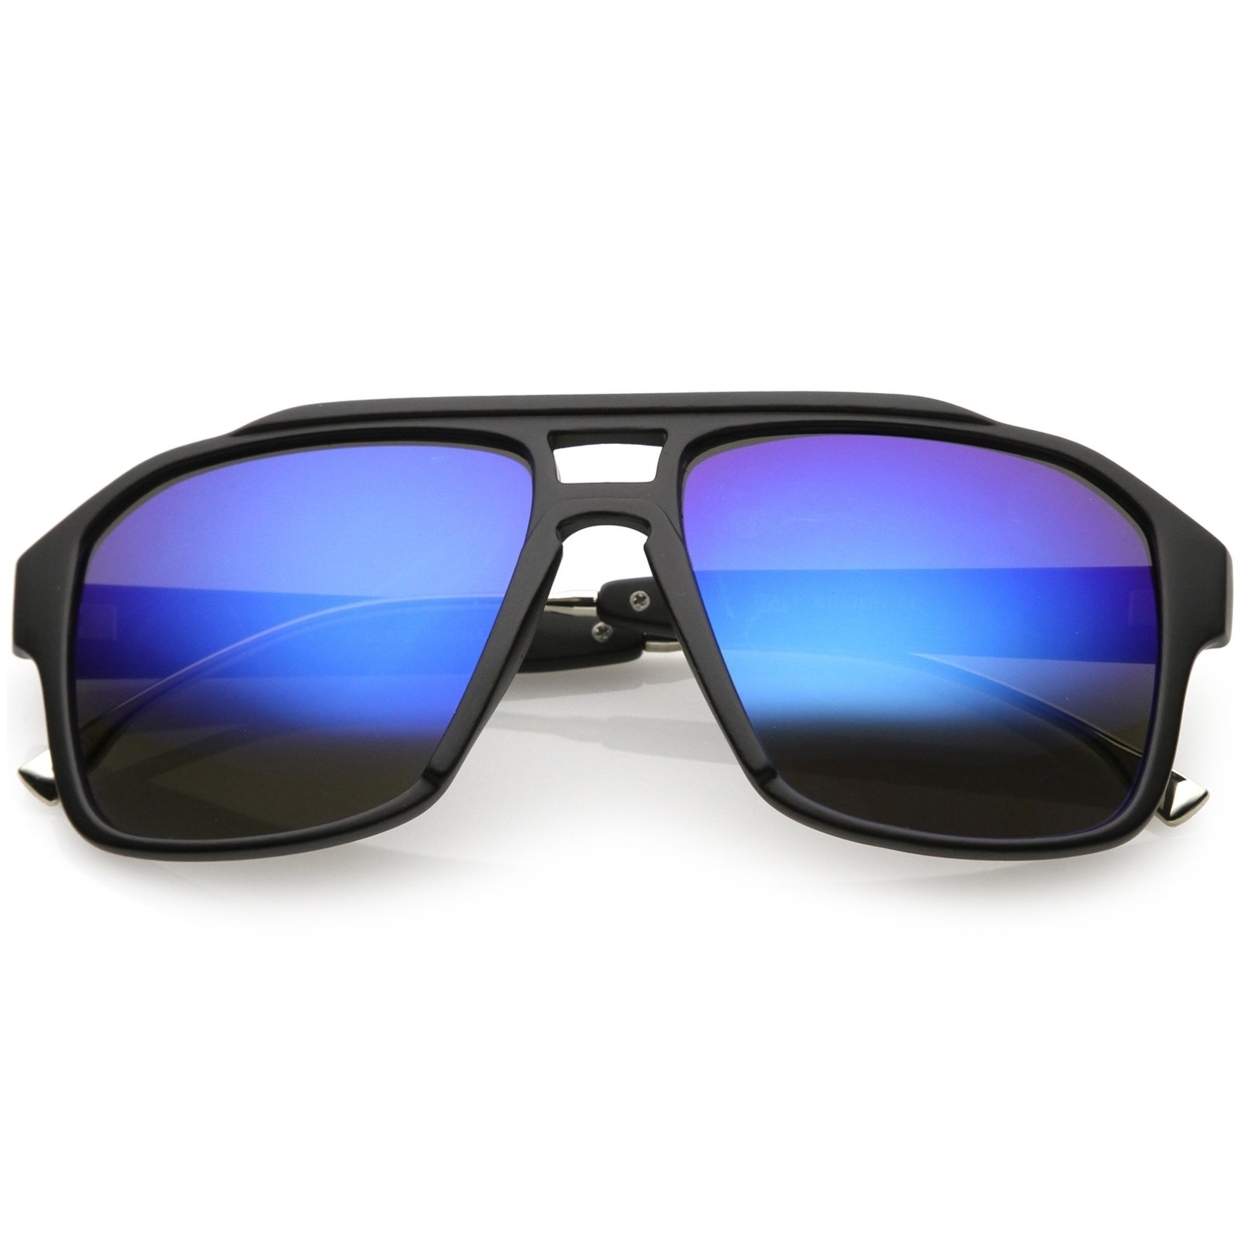 Sporty Aviator Sunglasses Flat Top Keyhole Nose Bridge Square Mirrored Lens 55mm - Matte Black / Gold Mirror